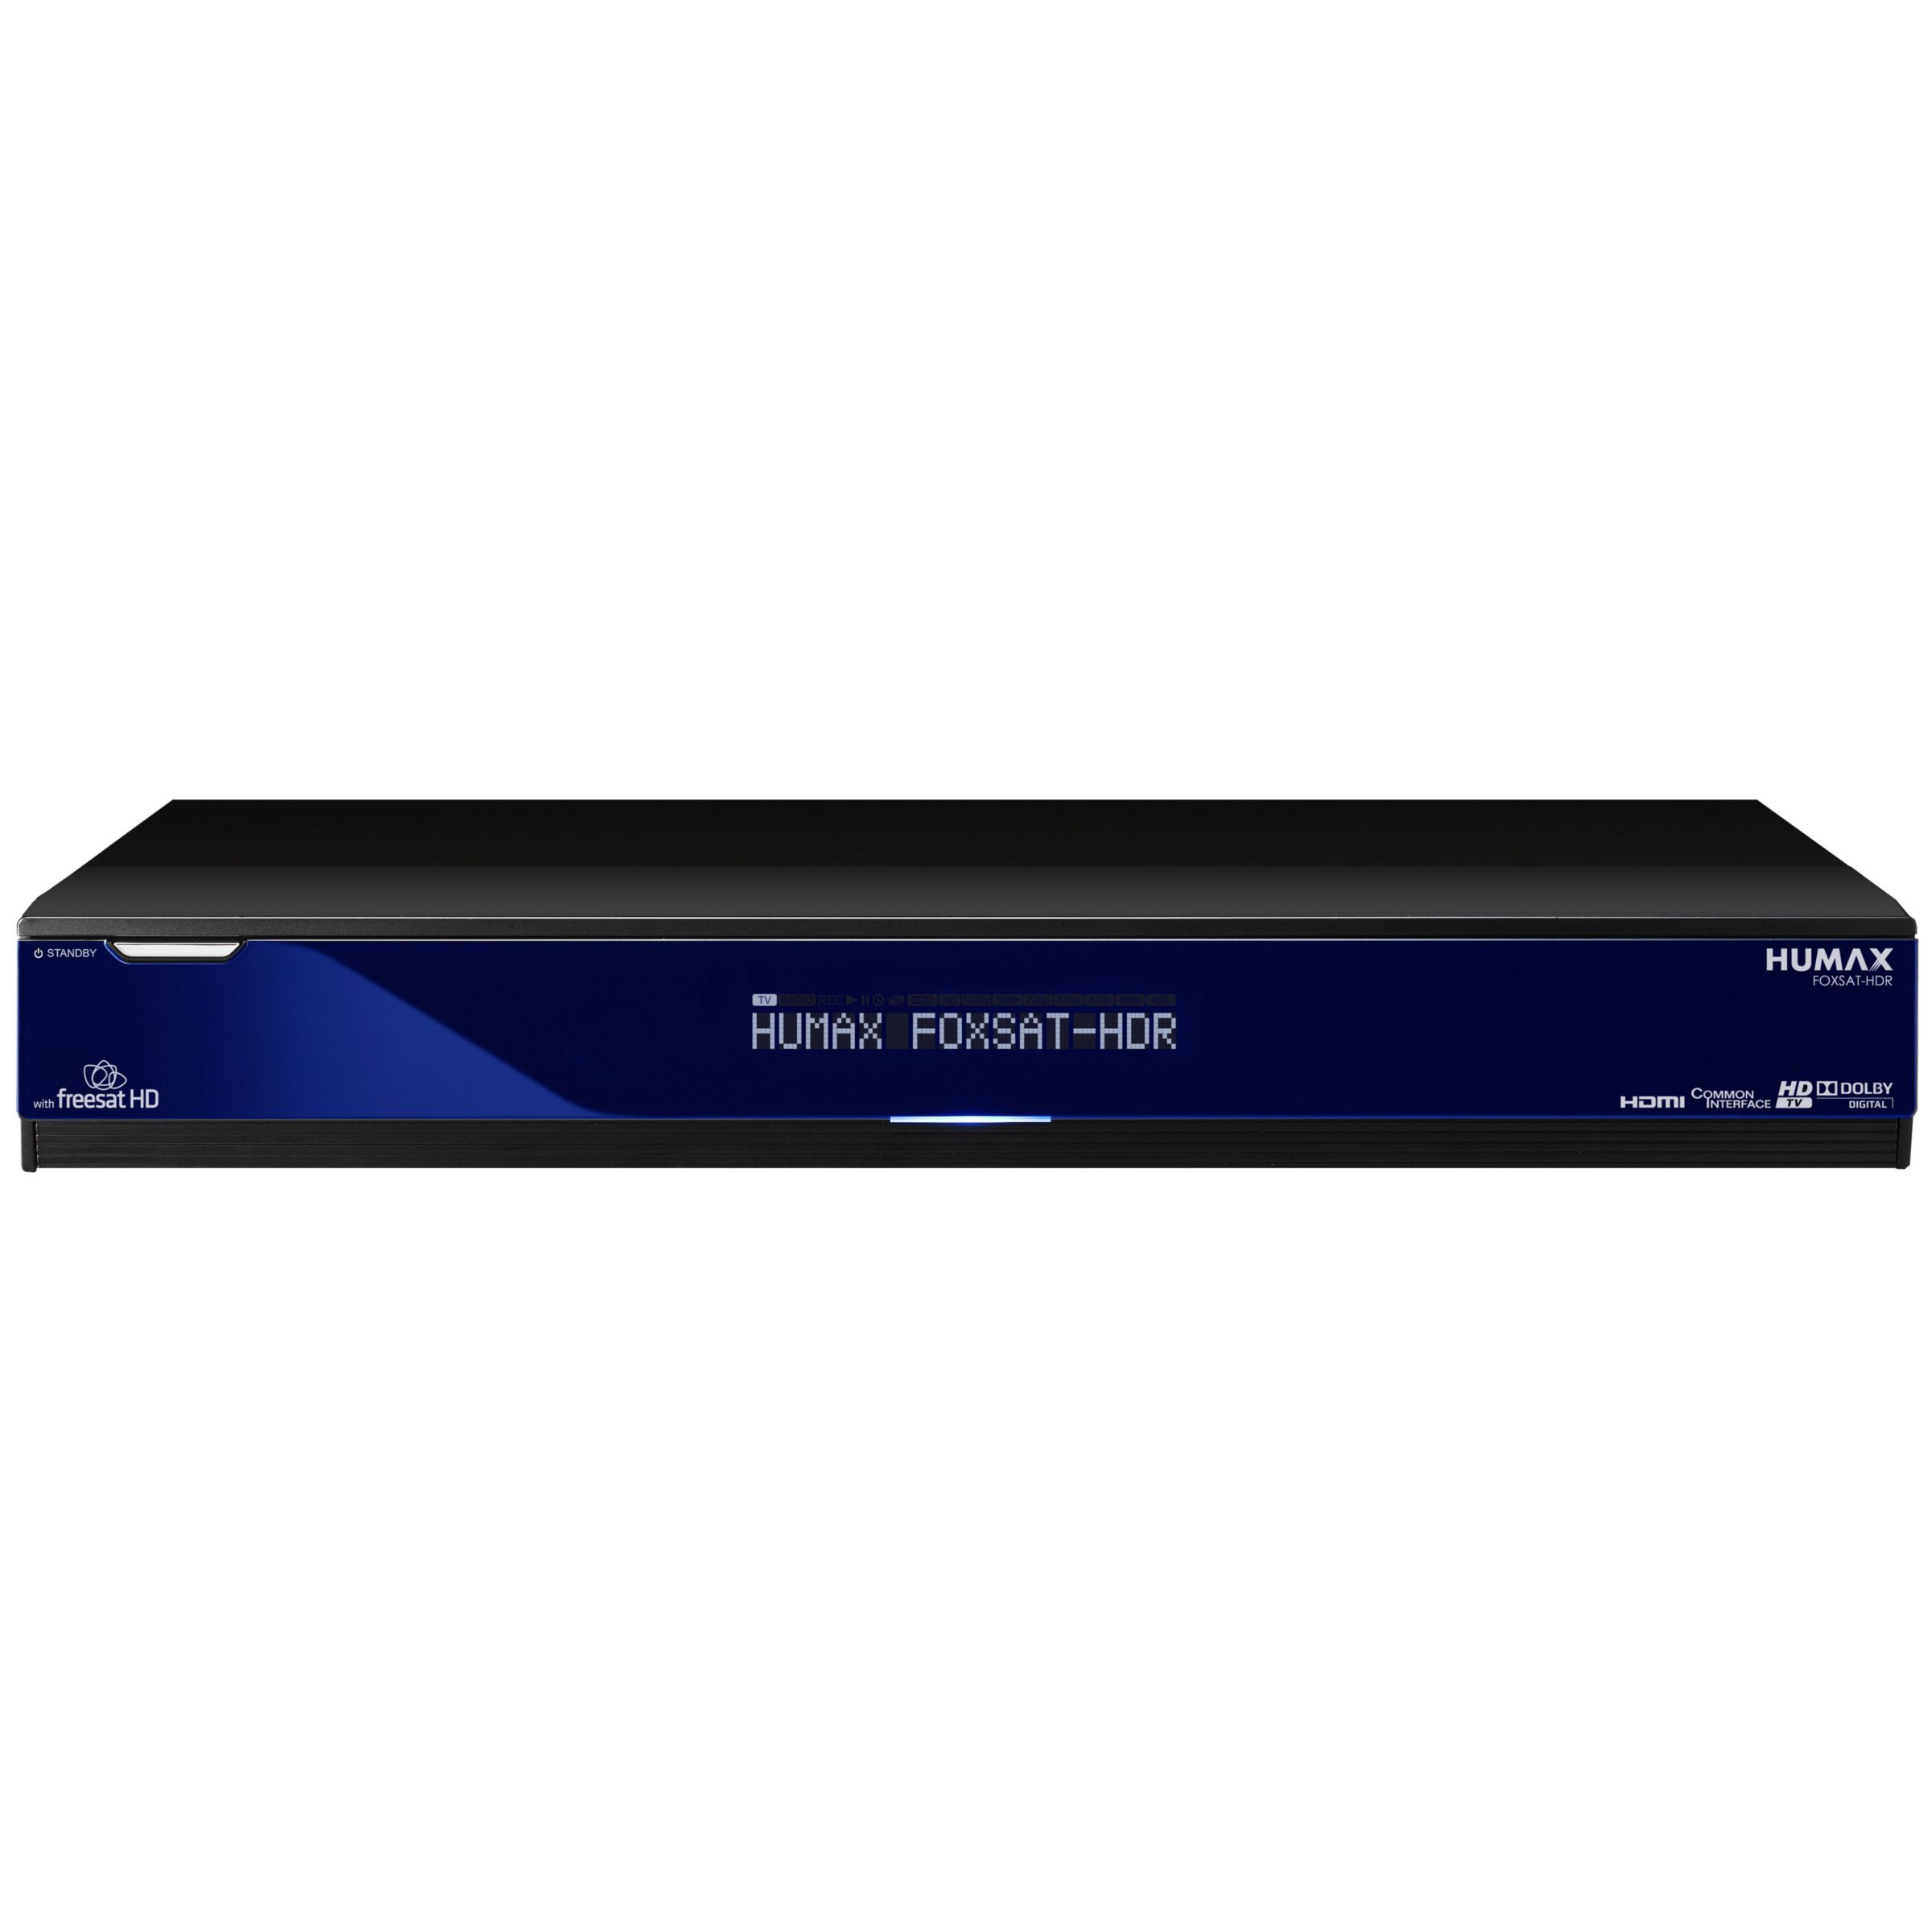 Humax FOXSAT-HDR 320GB freesat Digital TV Recorder at John Lewis